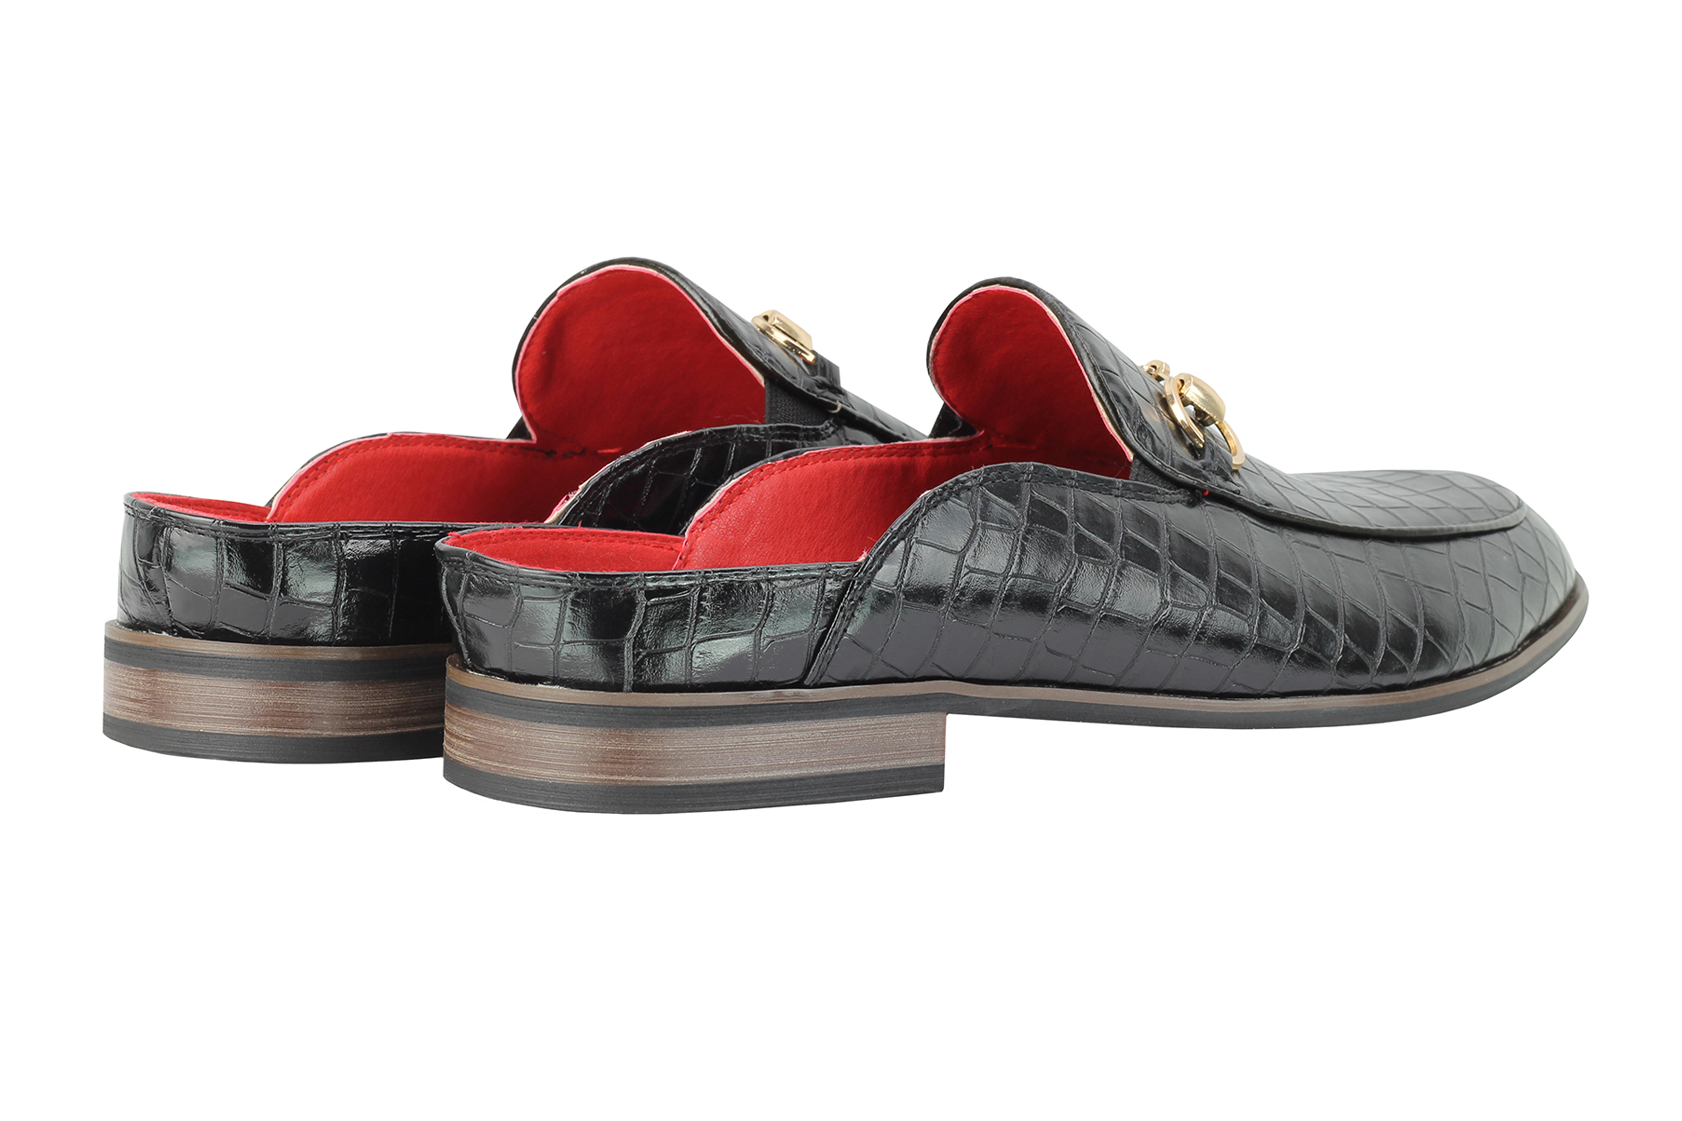 Men's Half Shoes With Buckle Design - Black